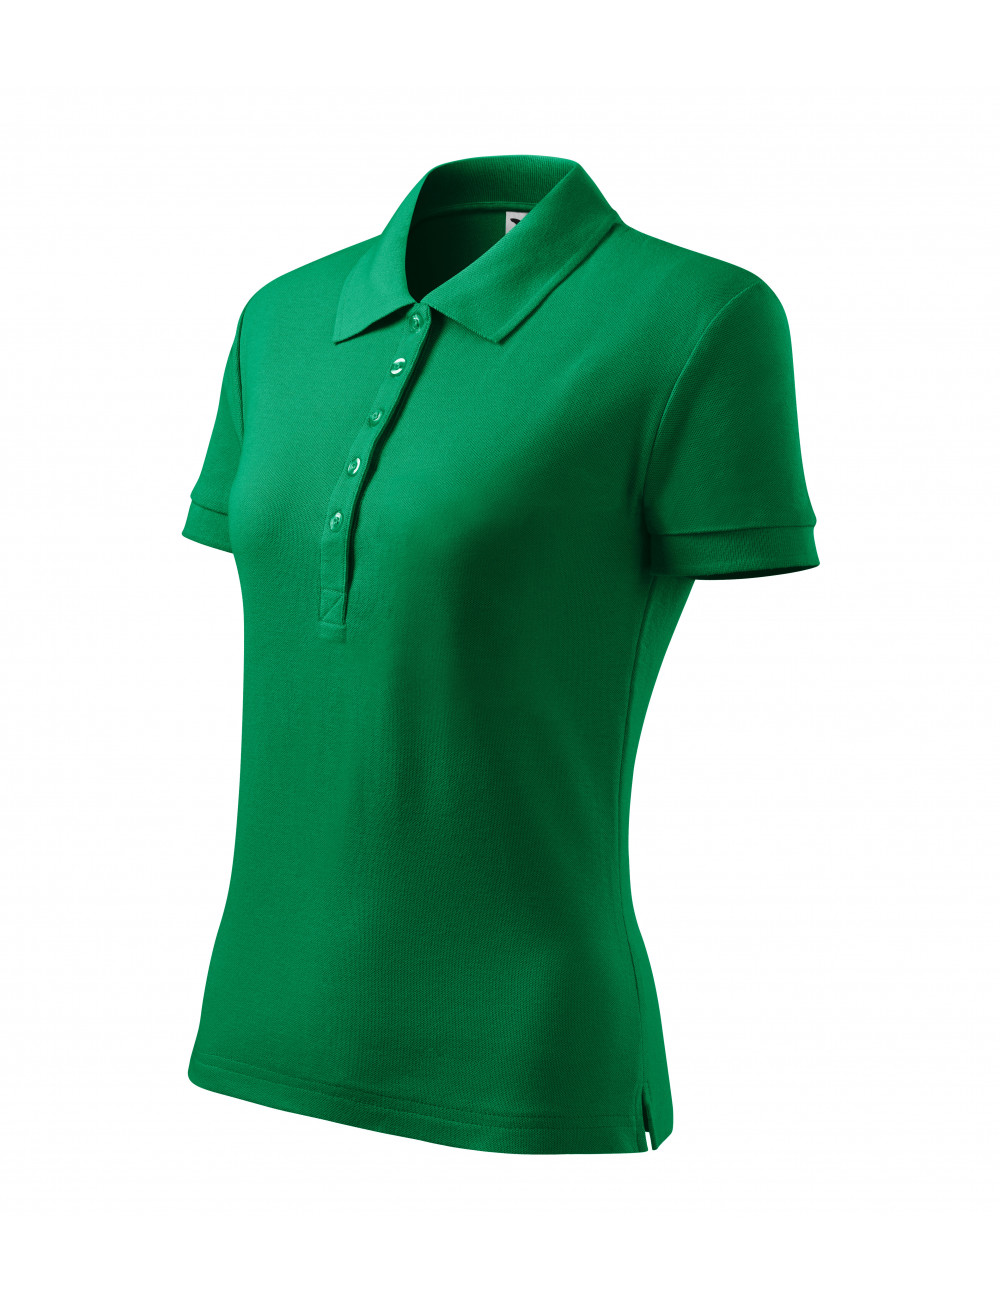 Women`s polo shirt cotton heavy 216 grass green Adler Malfini